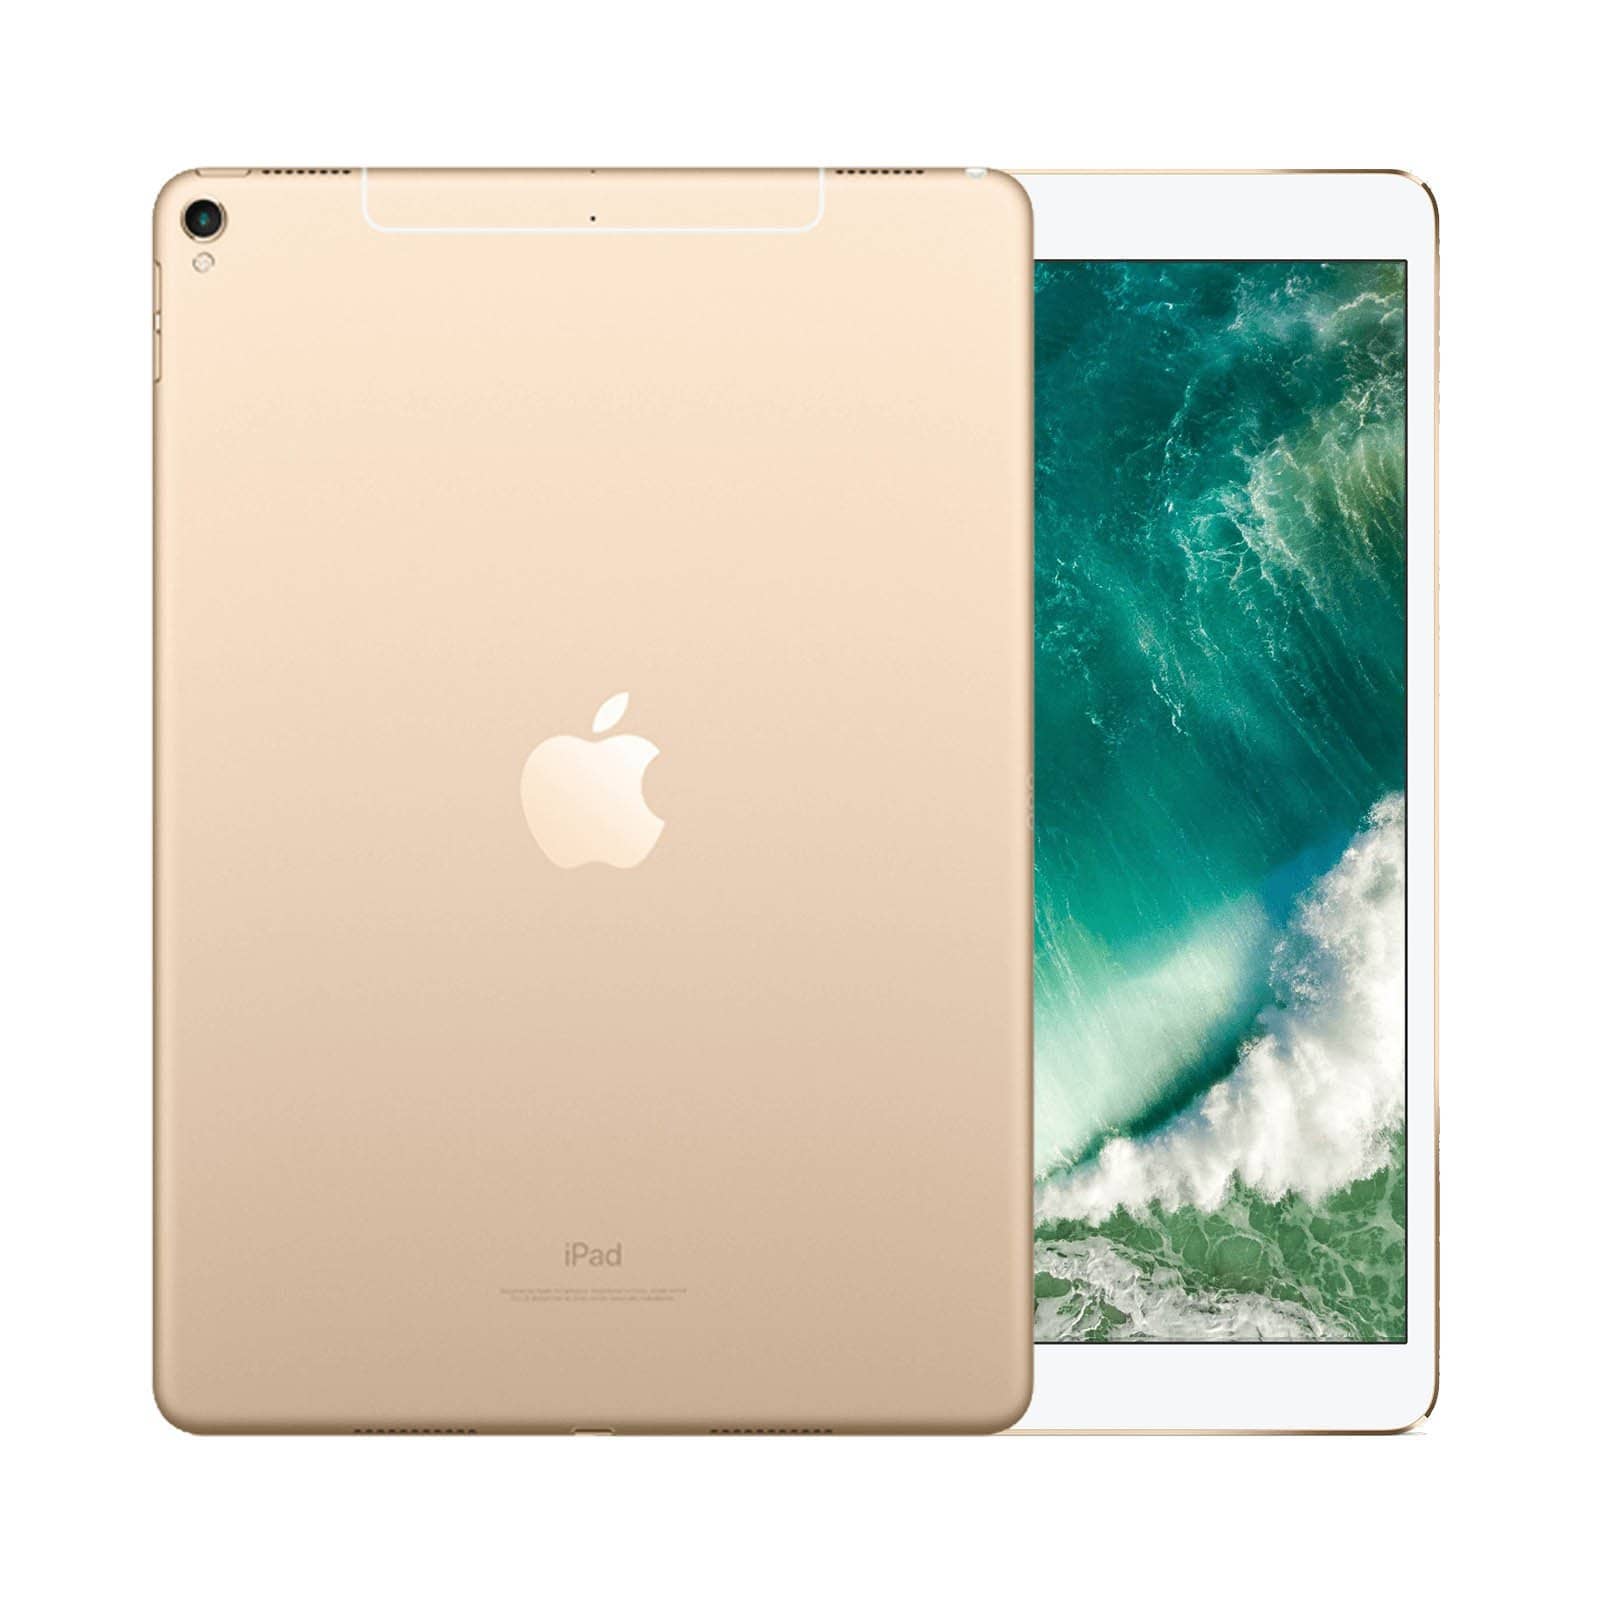 iPad Pro 10.5 Inch 64GB Gold Very Good - Unlocked 64GB Gold Very Good